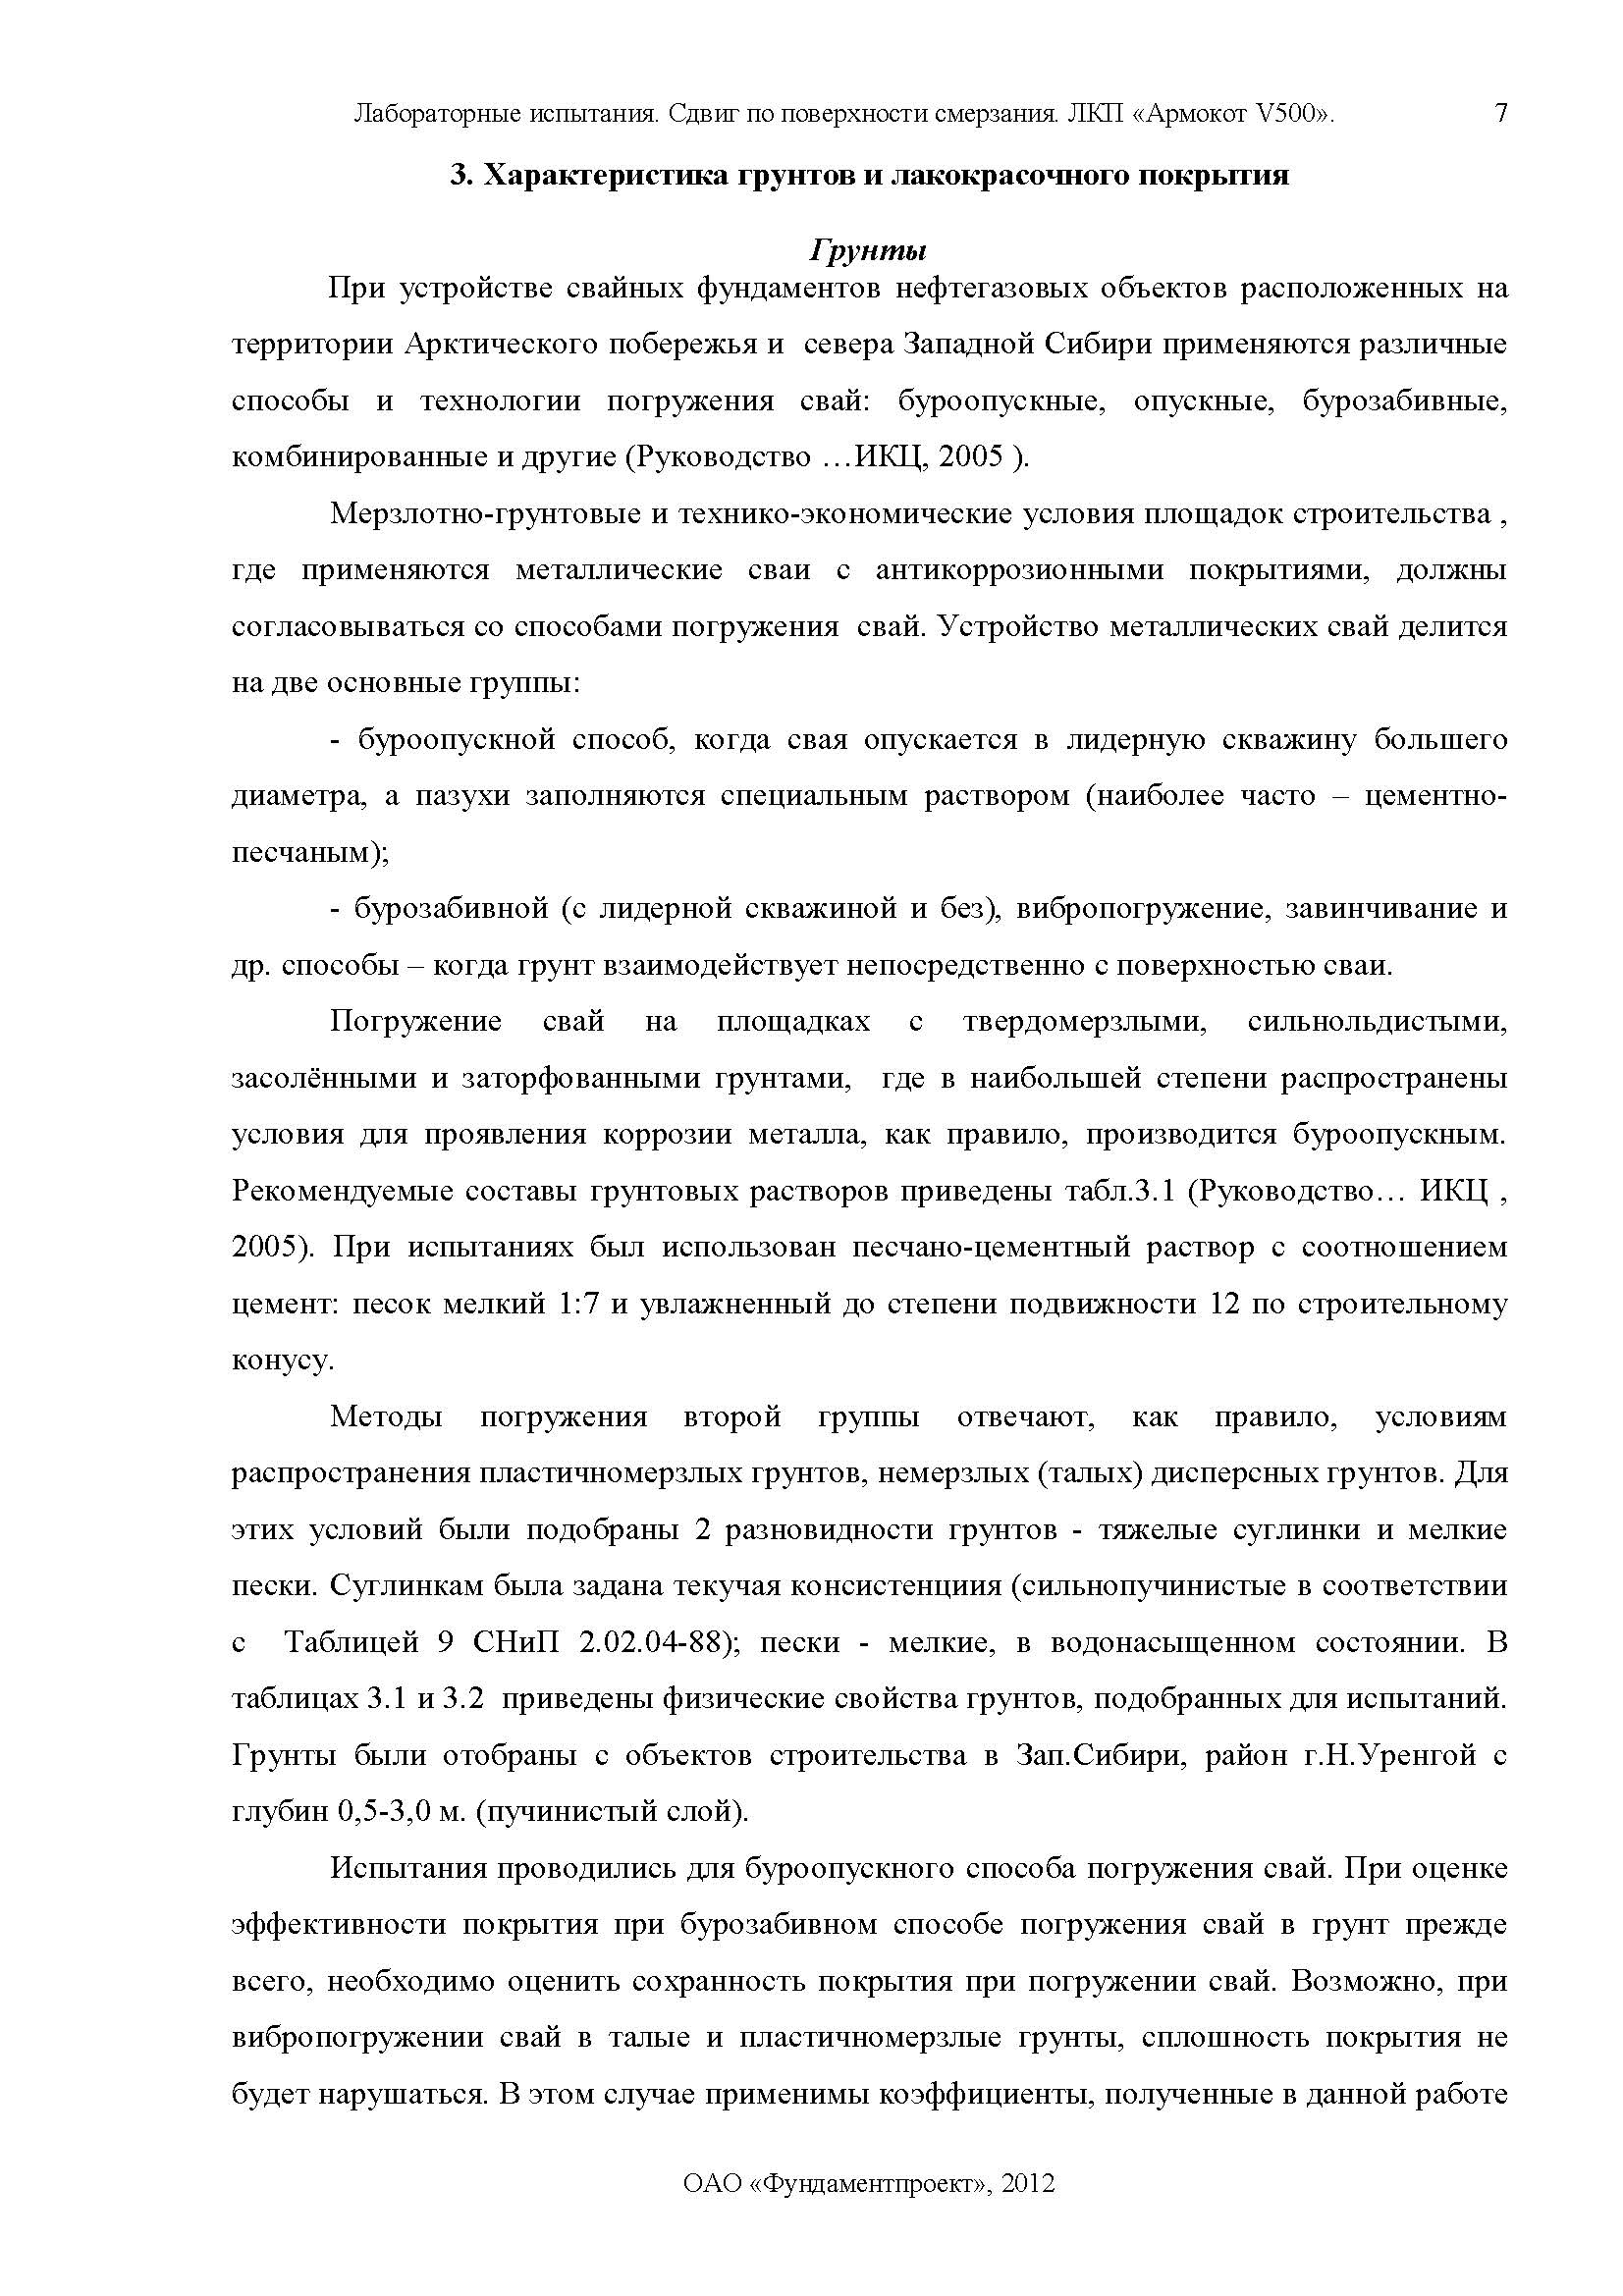 Отчет по сваям Армокот V500 Фундаментпроект_Страница_07